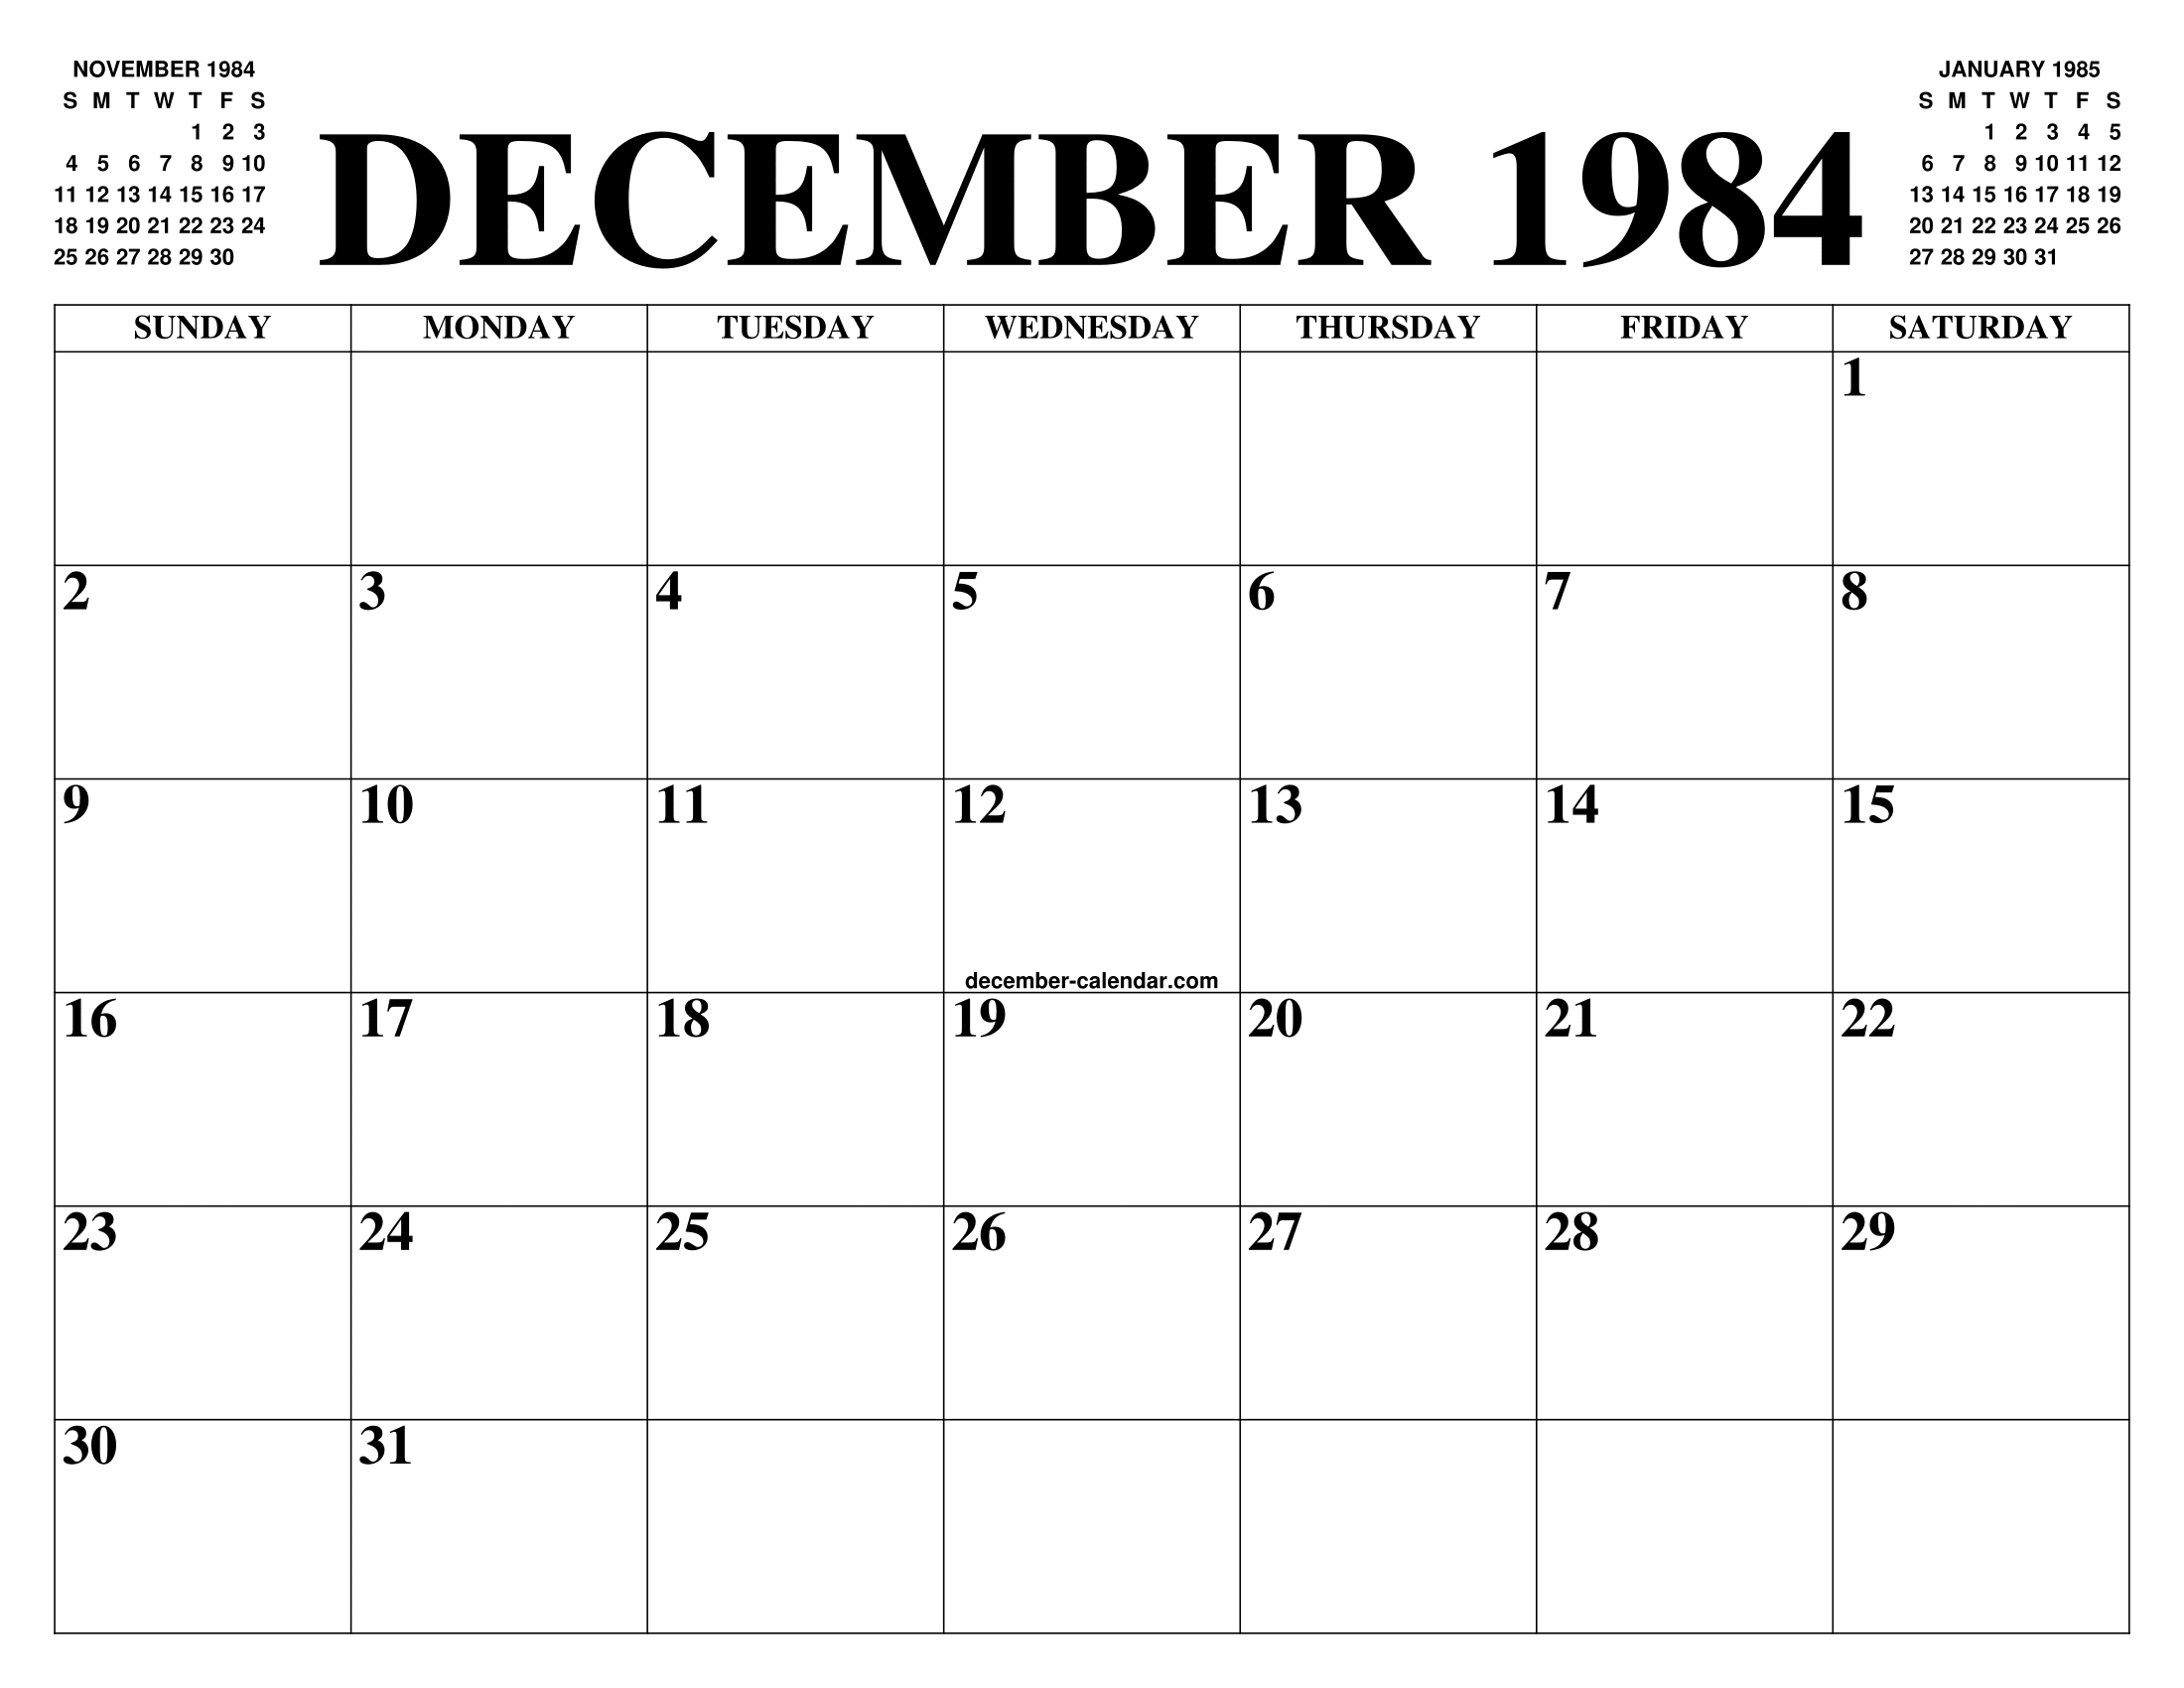 DECEMBER 1984 CALENDAR OF THE MONTH: FREE PRINTABLE DECEMBER CALENDAR